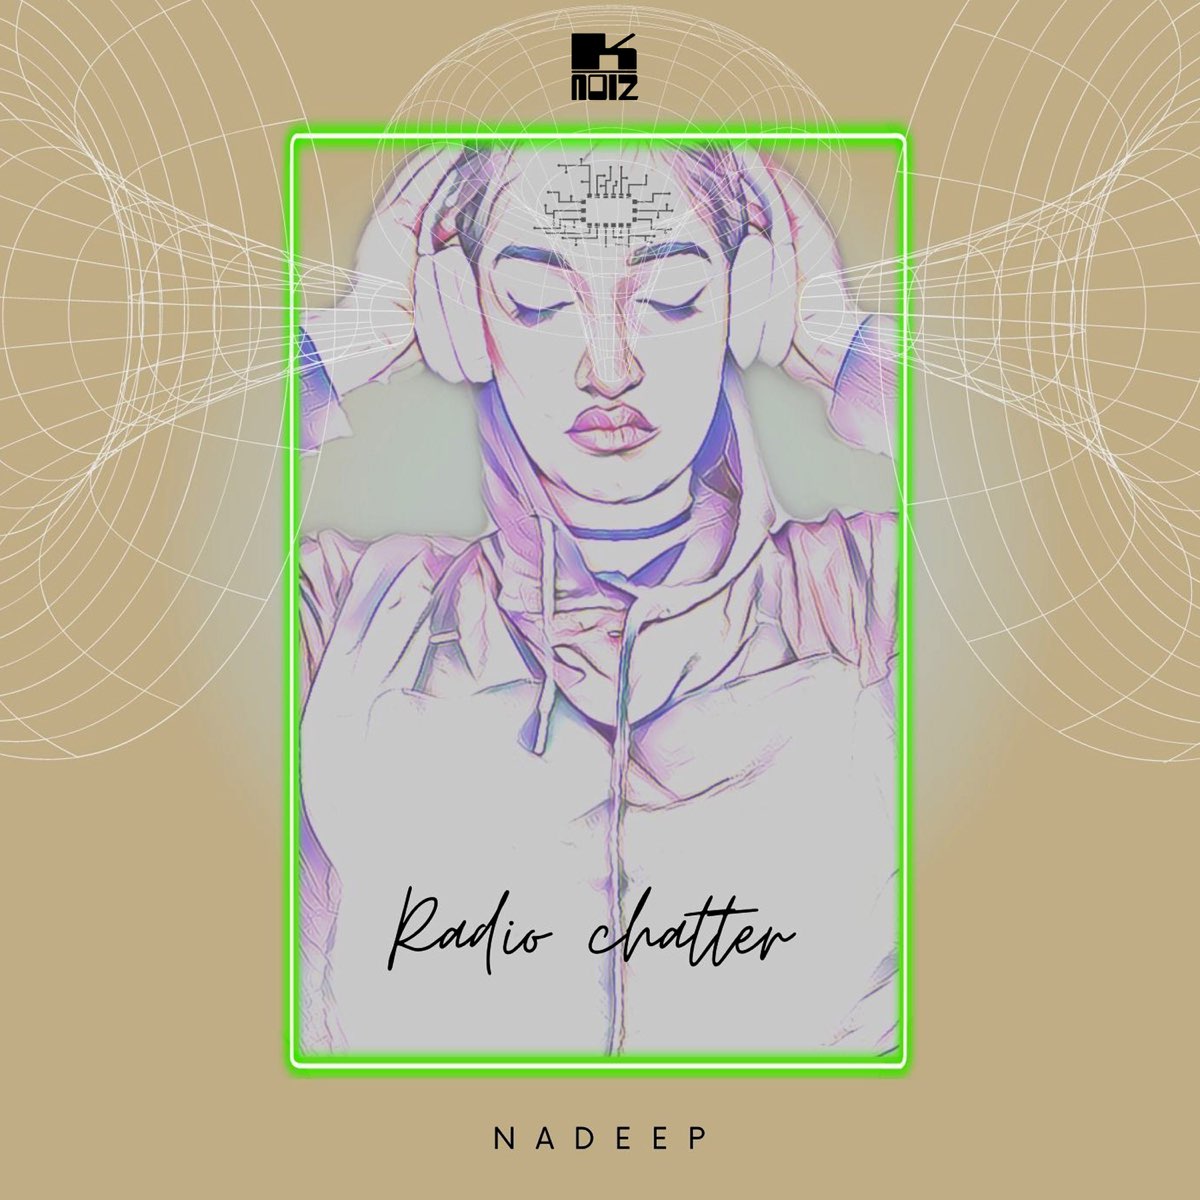 Radio Chatter - Single by Nadeep on Apple Music